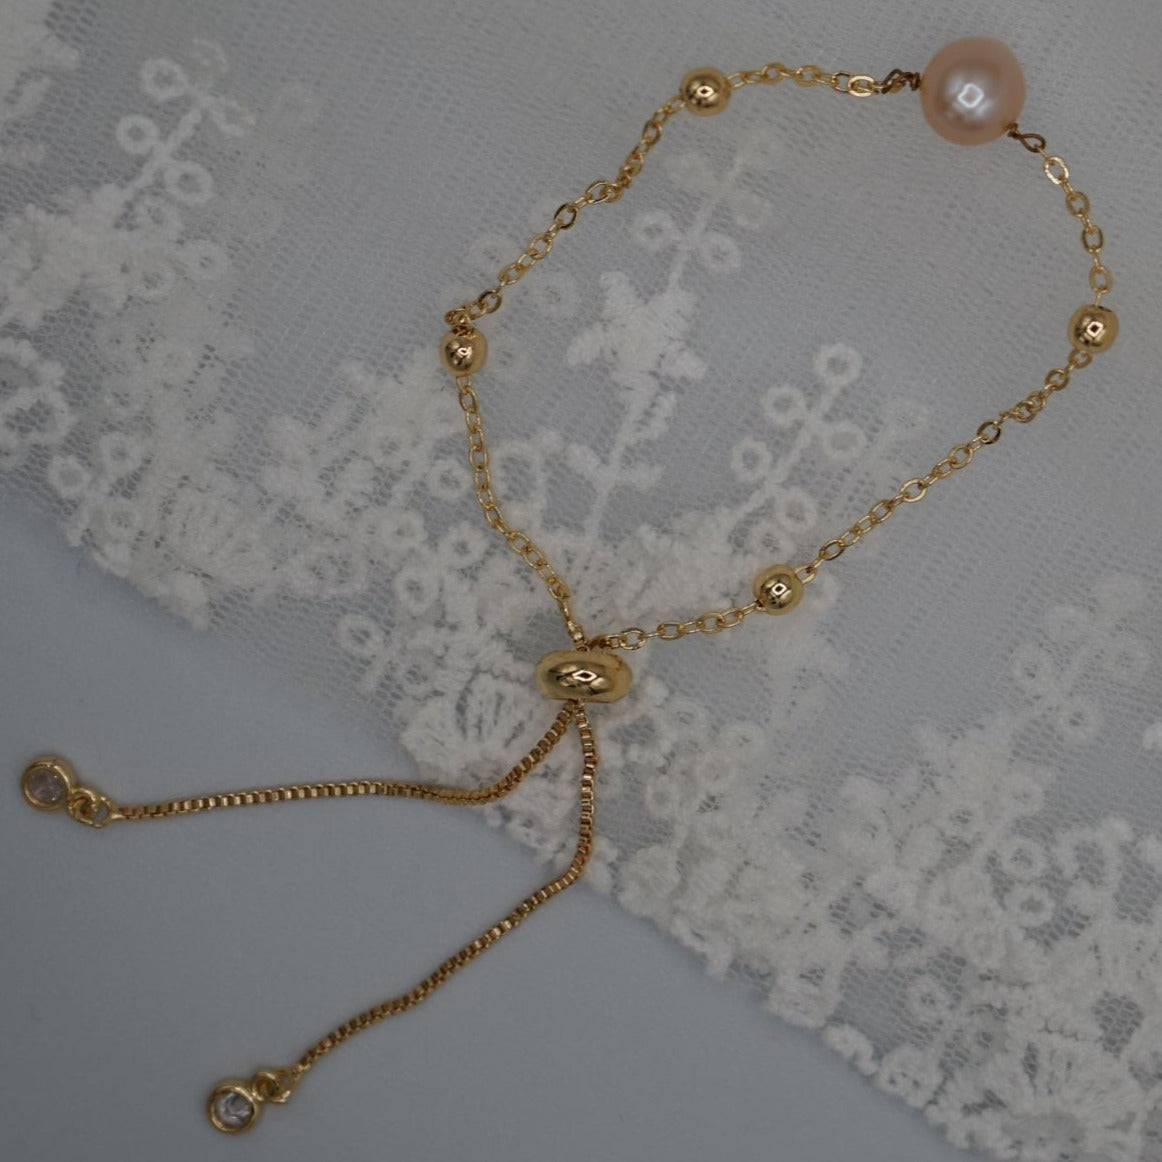 Pearl Bracelet - Adjustable Chain, No Clasp